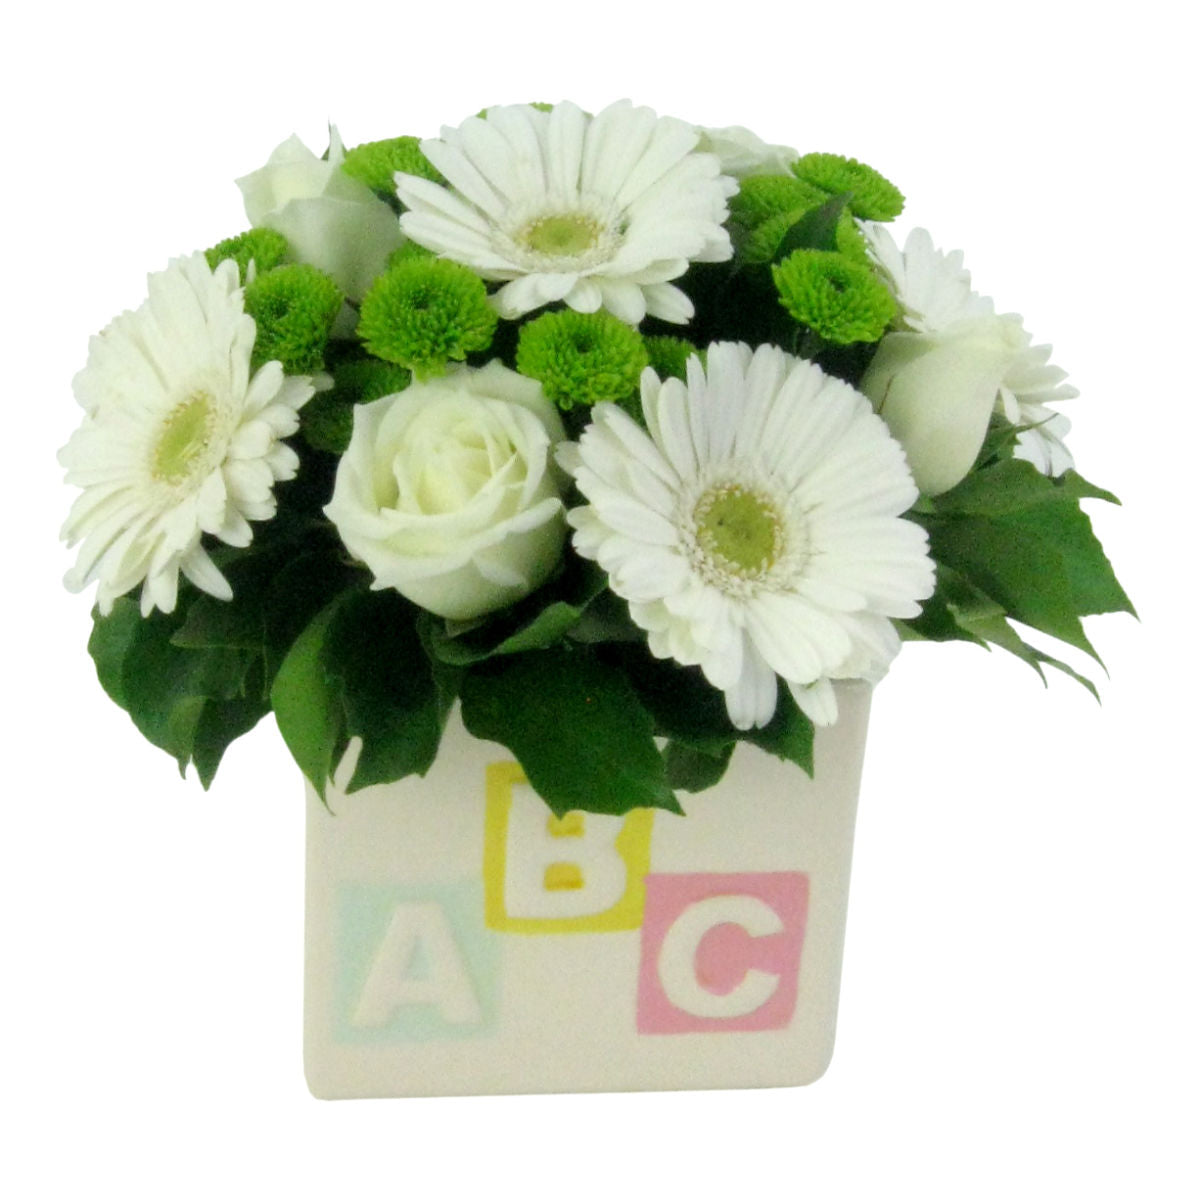 It's A Boy Flowers with ABC written box (5565060055204)